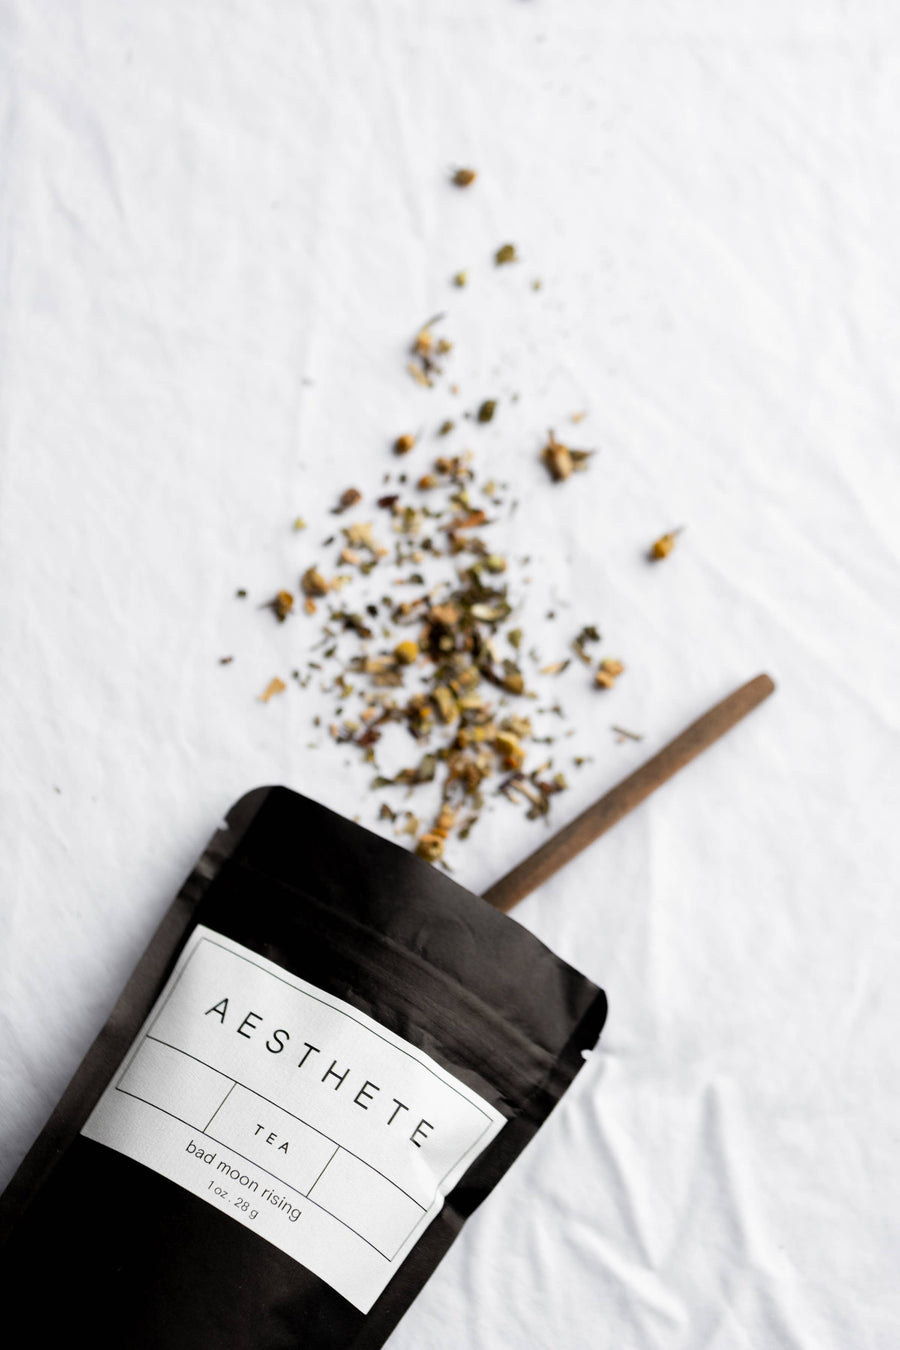 Aesthete Tea - Bad Moon Rising |  Herbal Blend: 1 oz